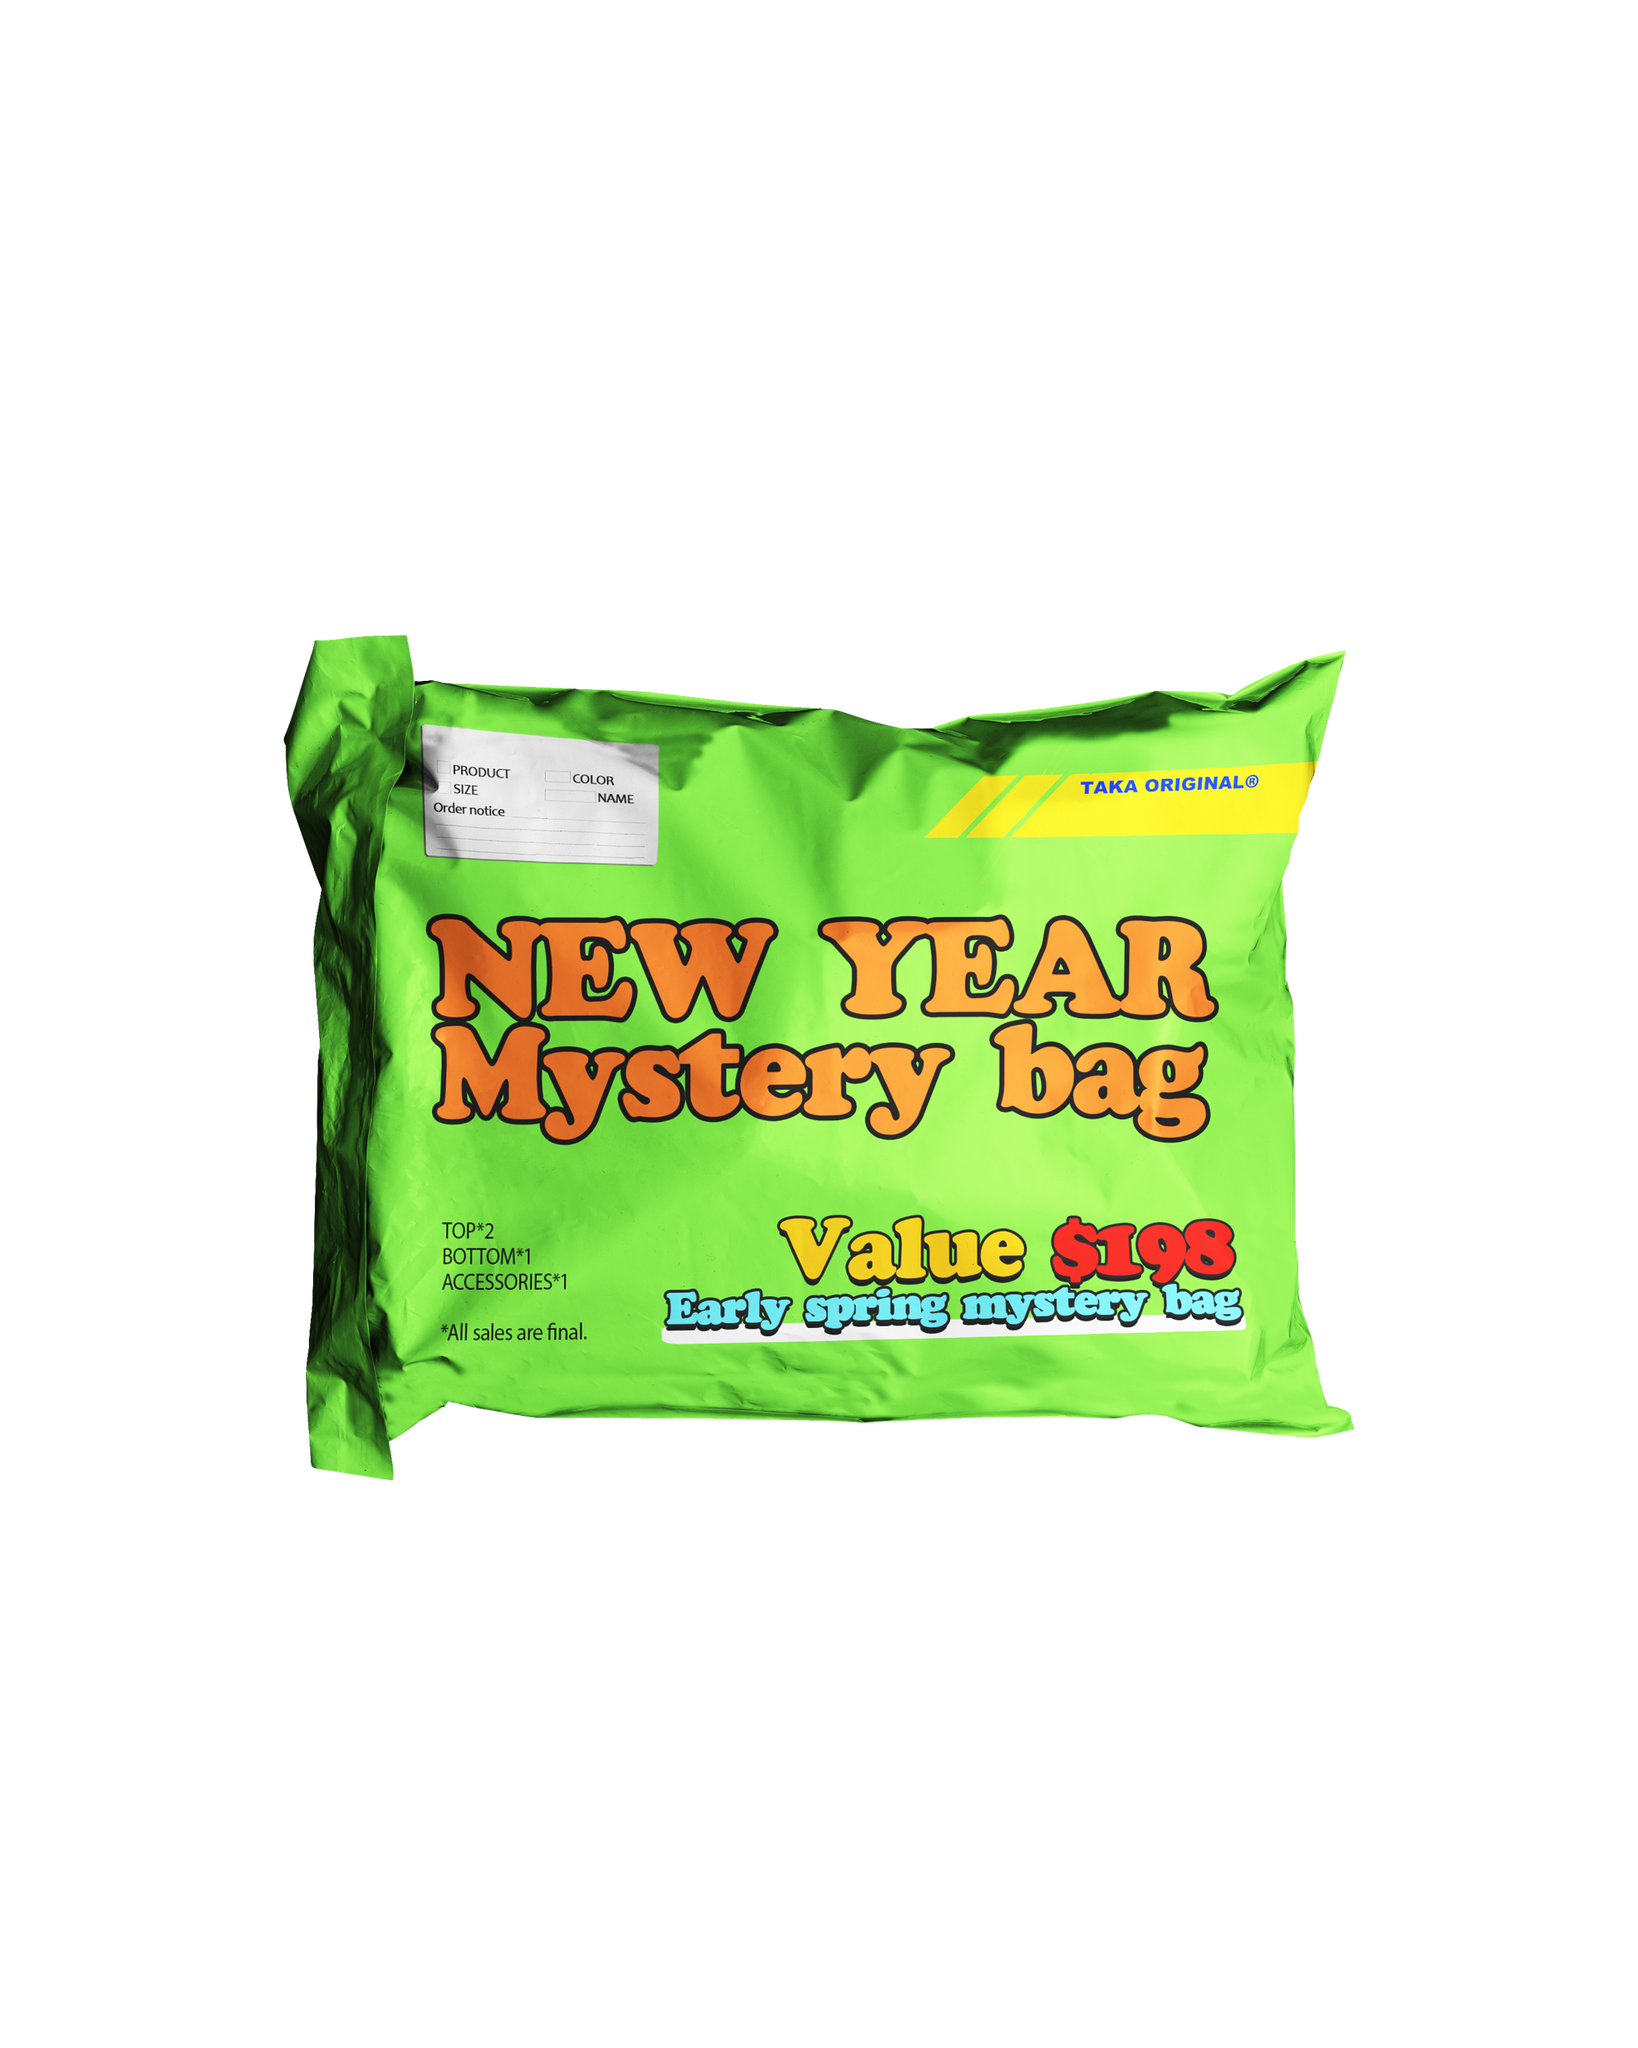 $99 NEW YEAR Mystery lucky bag / Velue $198